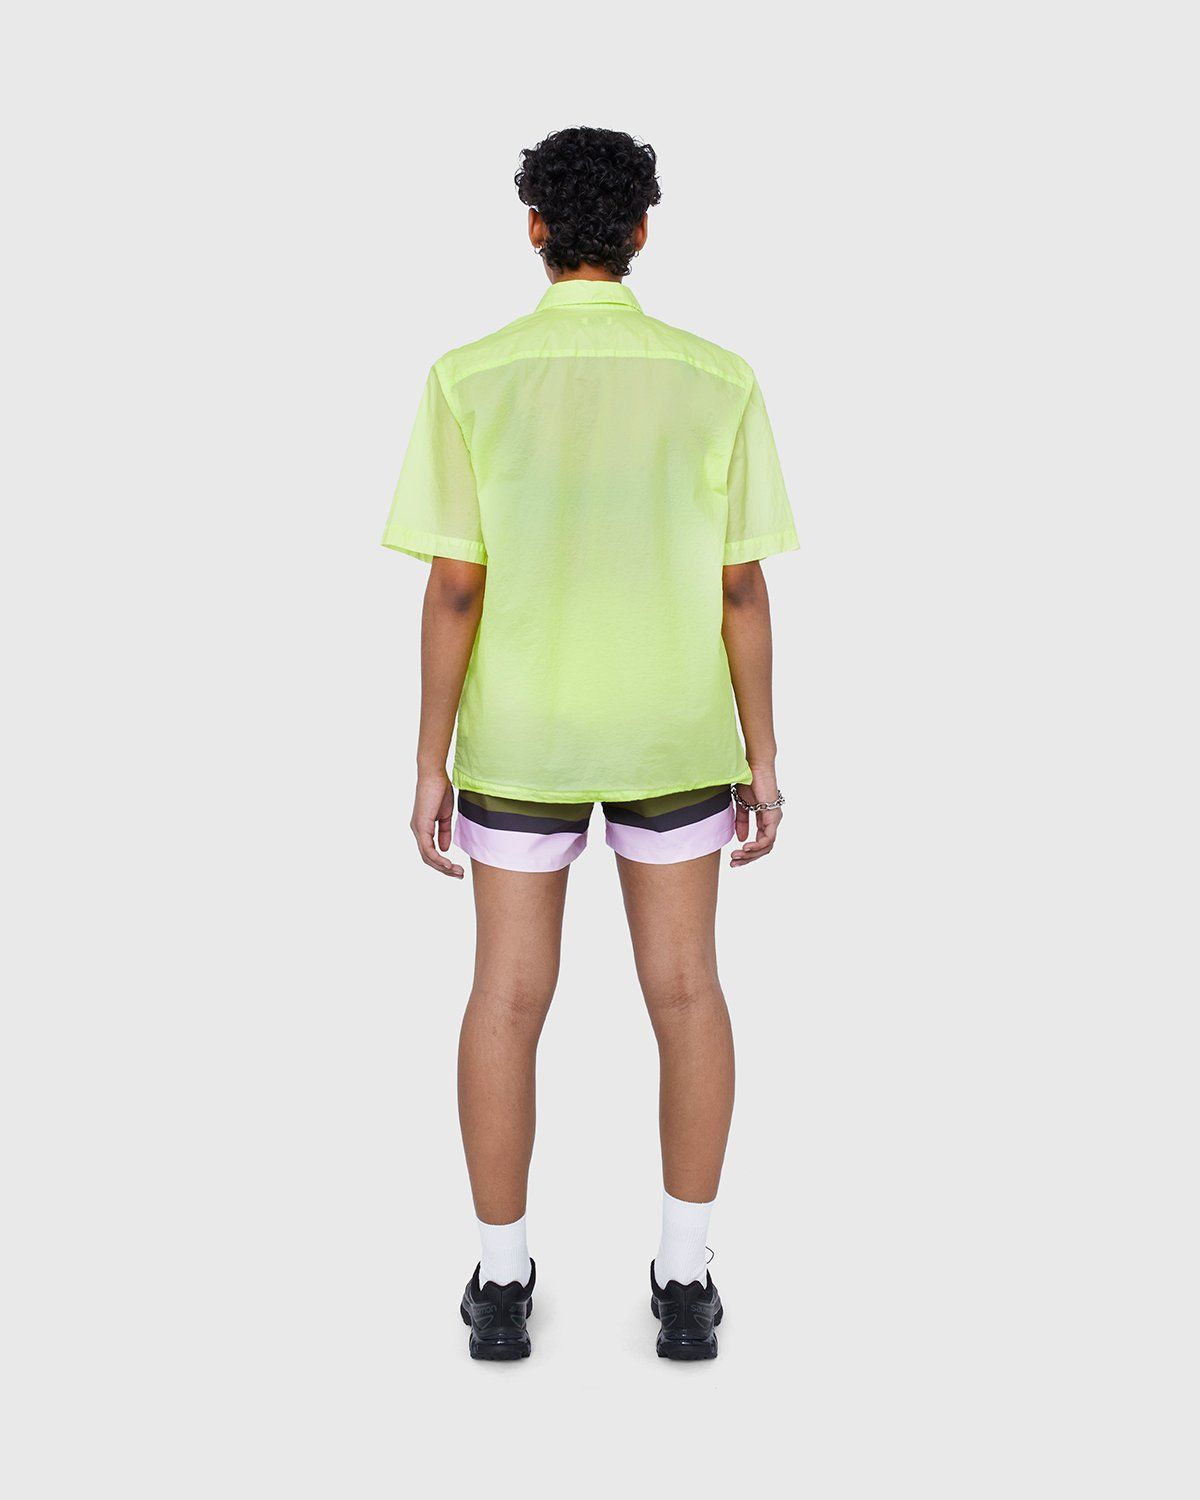 Dries van Noten – Clasen Shirt Lime - Shortsleeve Shirts - Green - Image 7